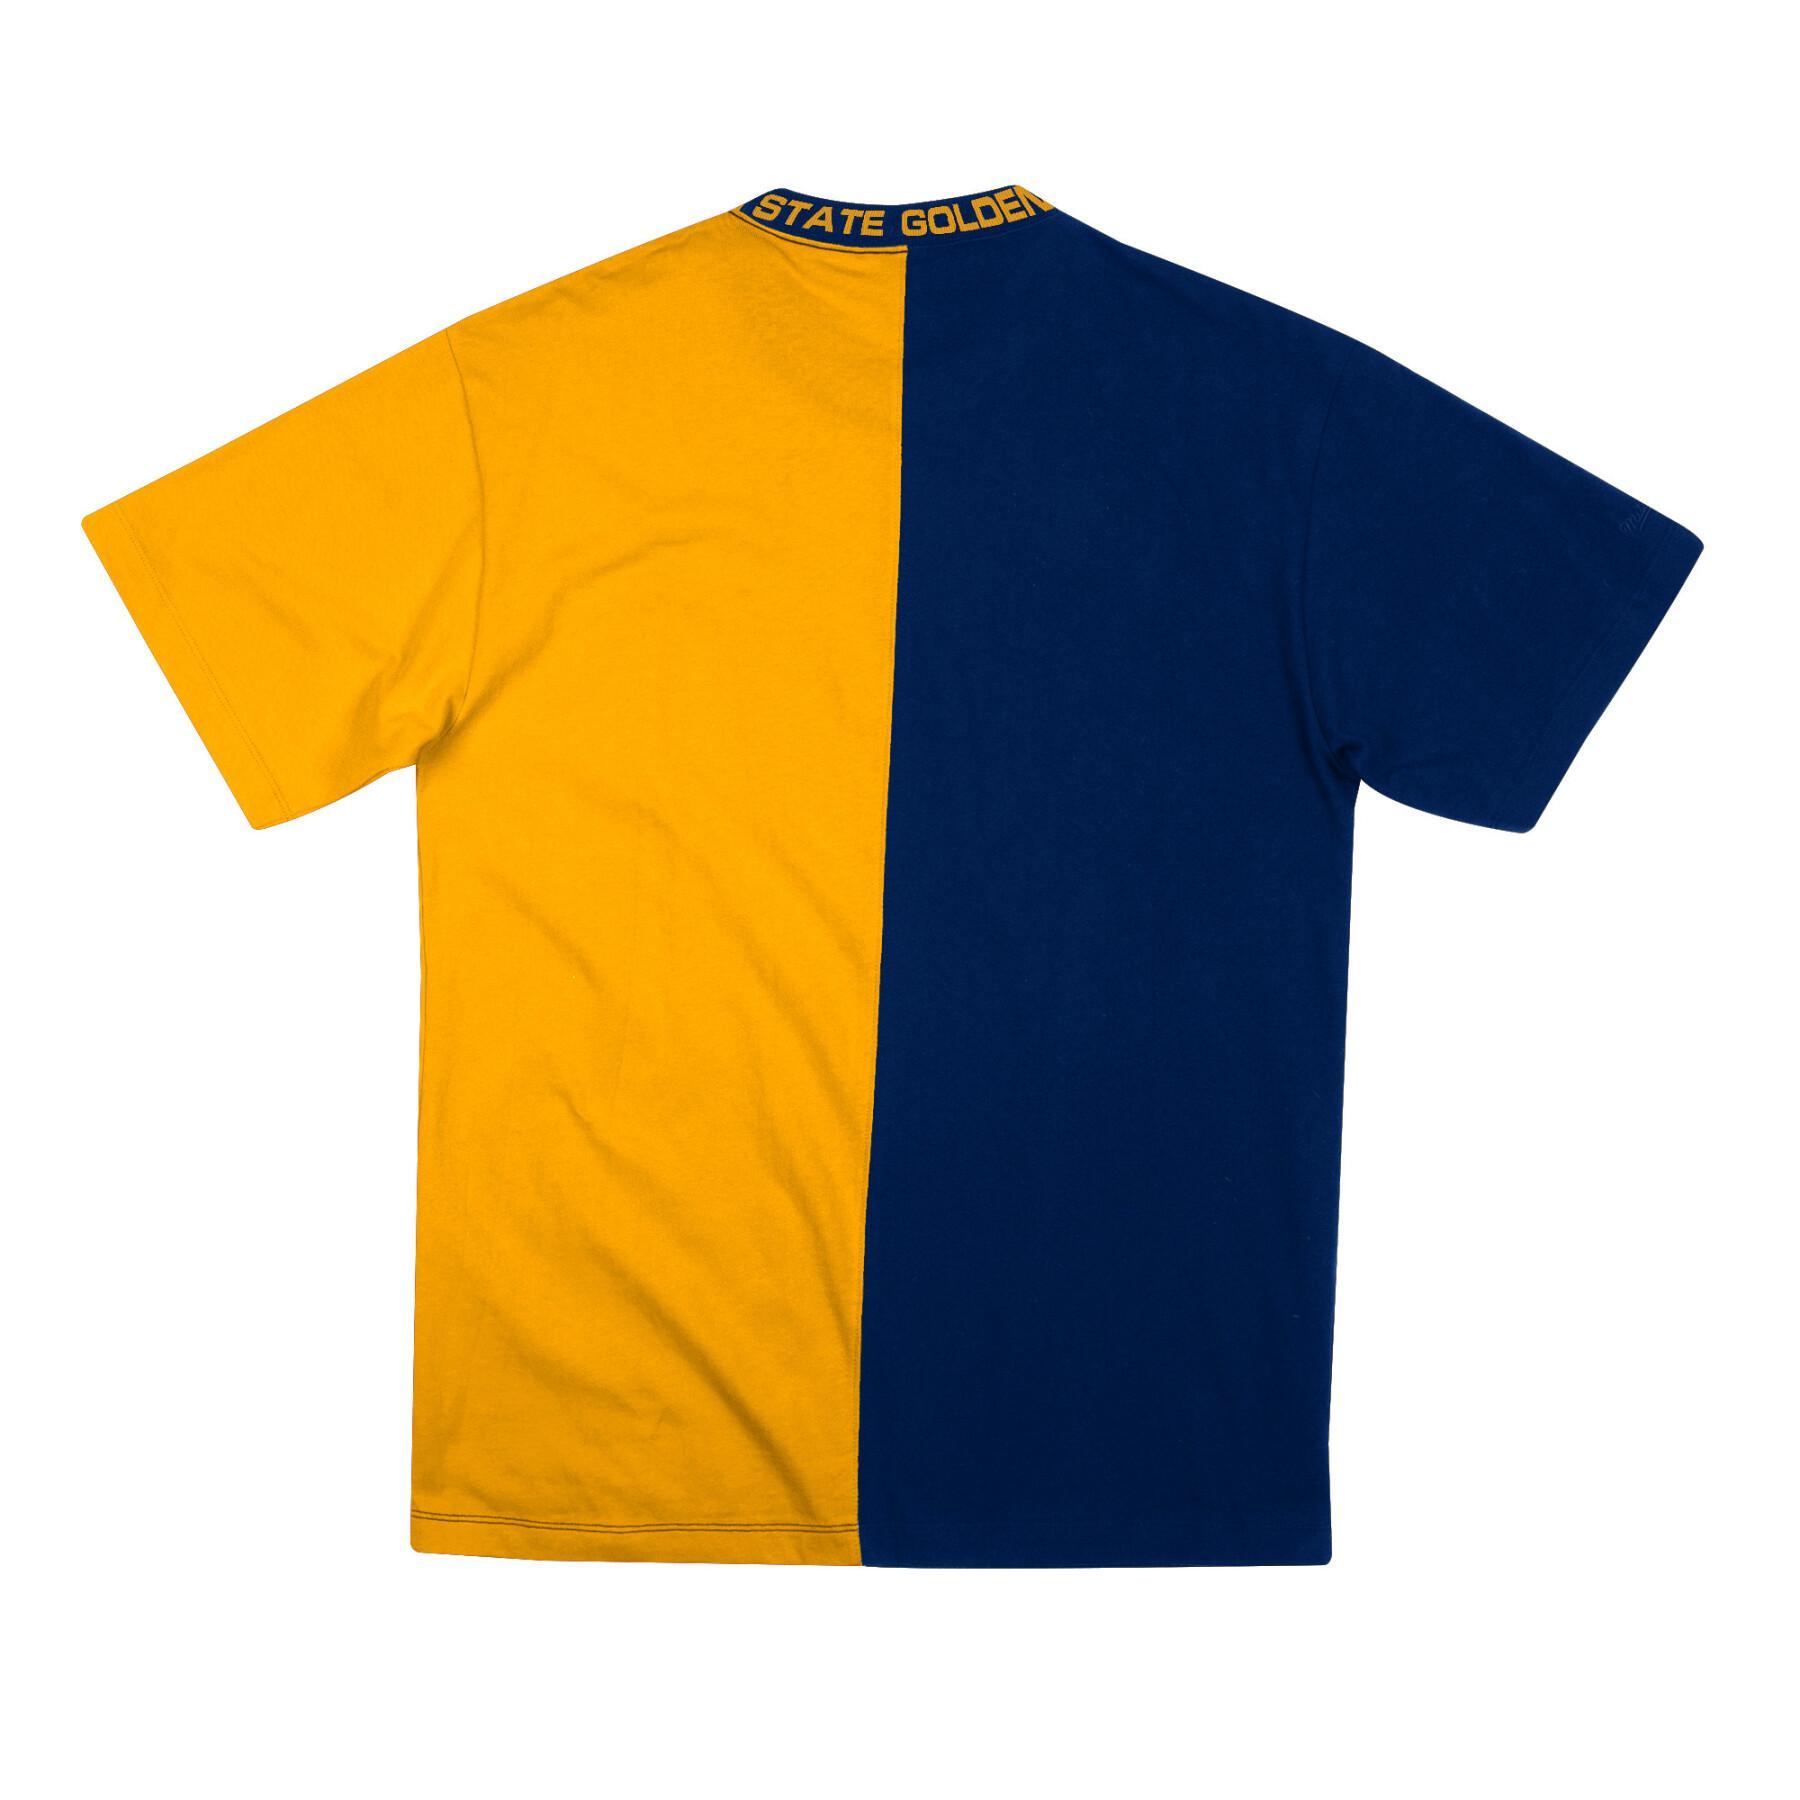 Camiseta Golden State Warriors nba split color